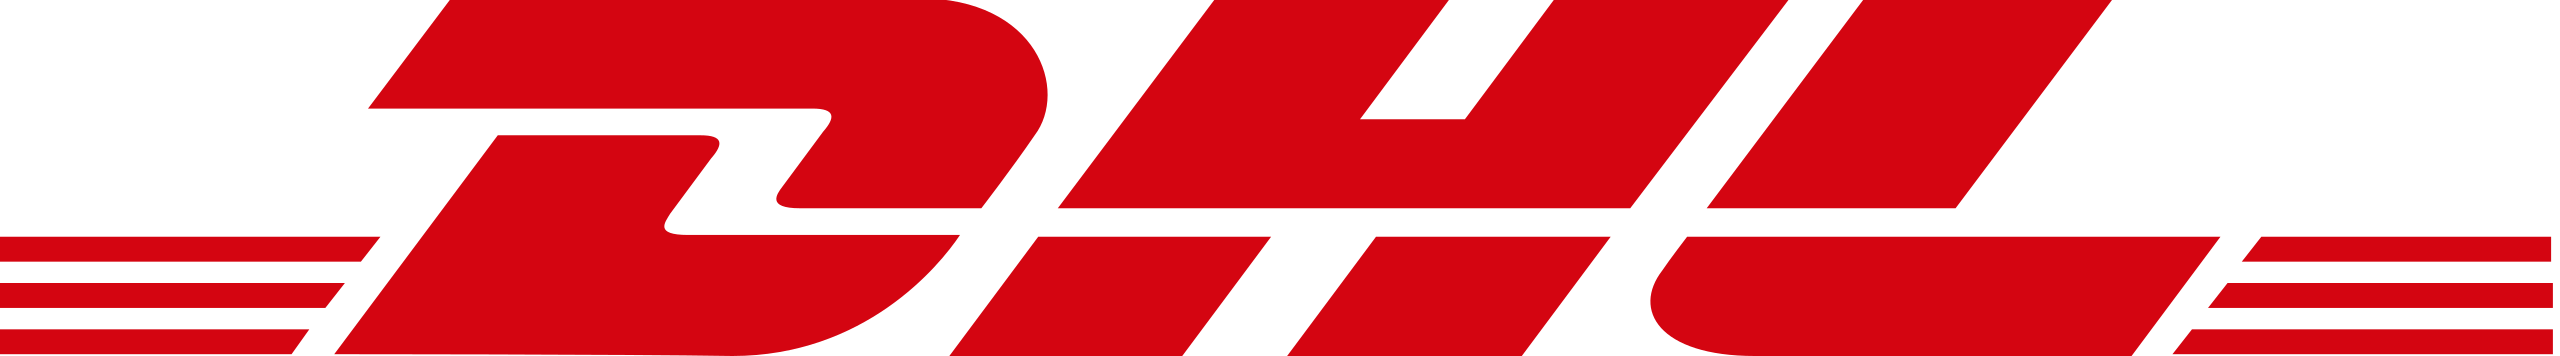 File:DHL Logo.svg - Wikimedia Commons